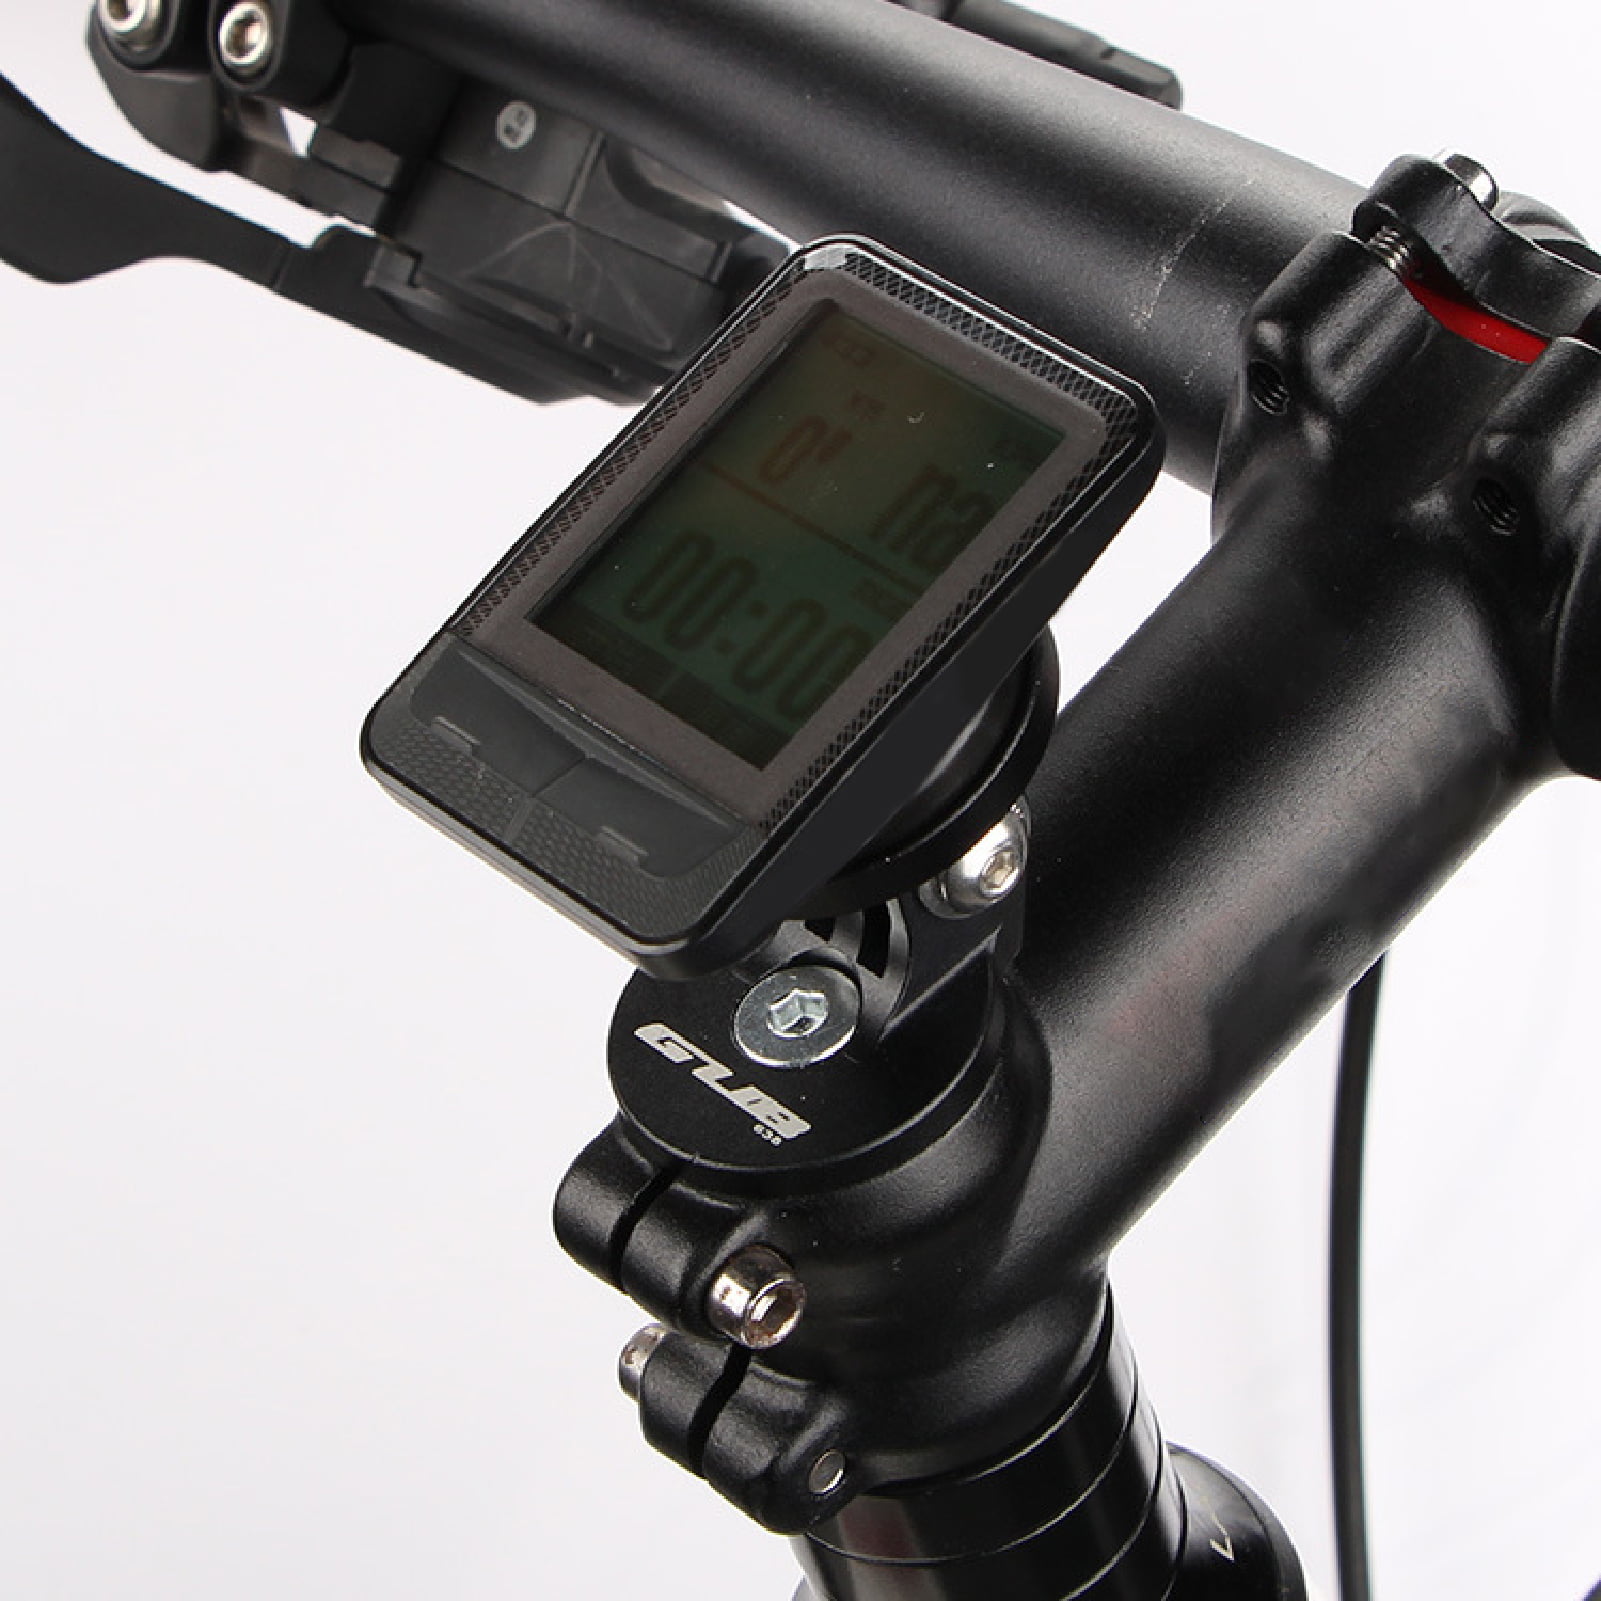 Bike Stem IGPS Stopwatch Bracket Extension Mount Holders For Garmin/Bryton/Wahoo 